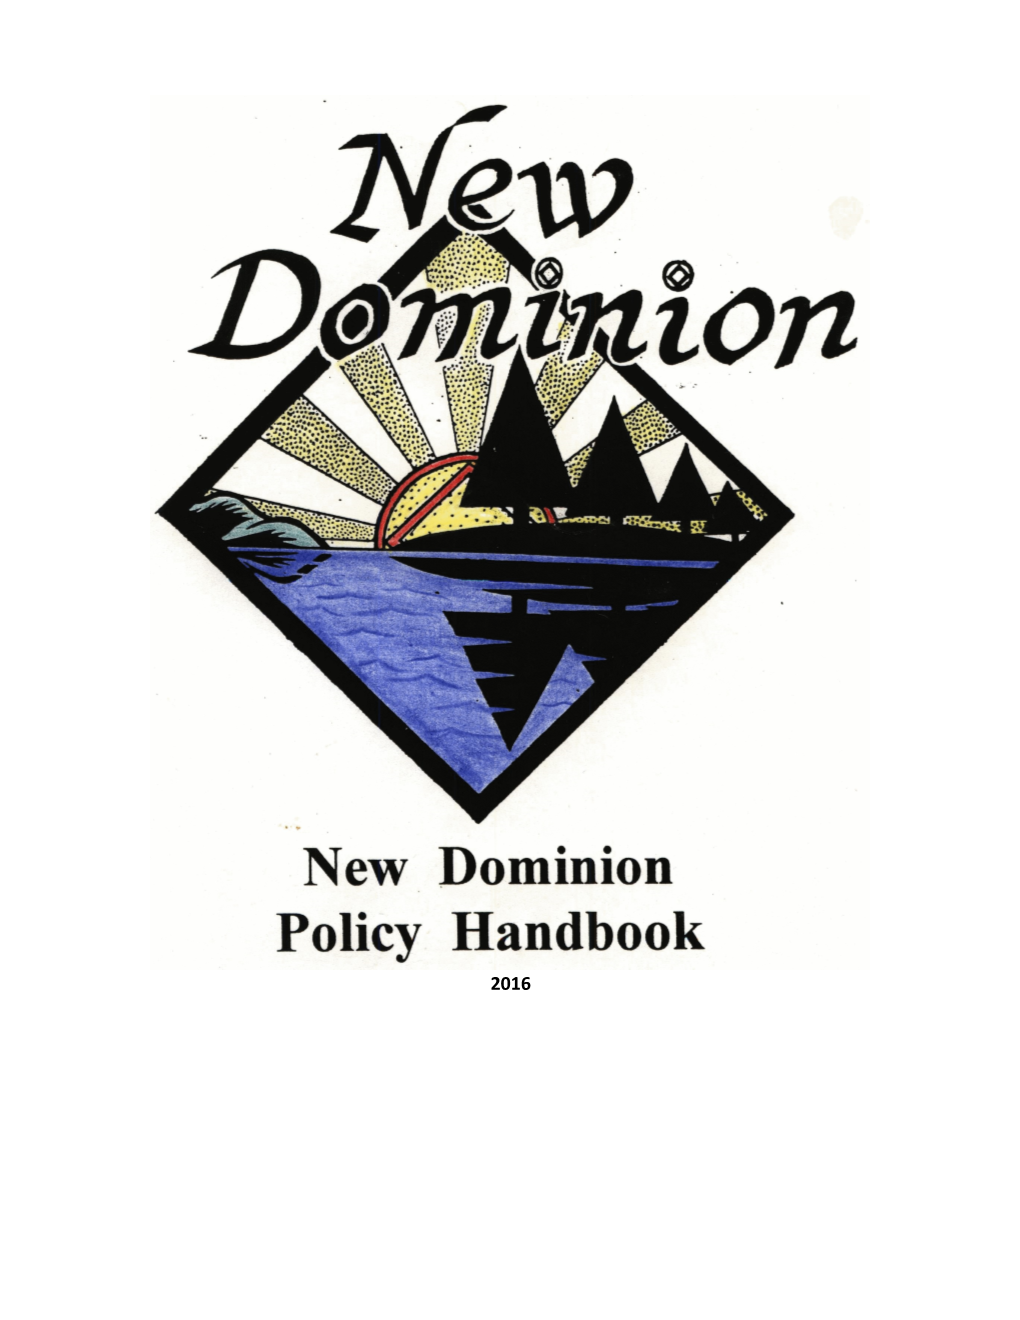 2008 NDANA Policy Handbook / Table of Contents